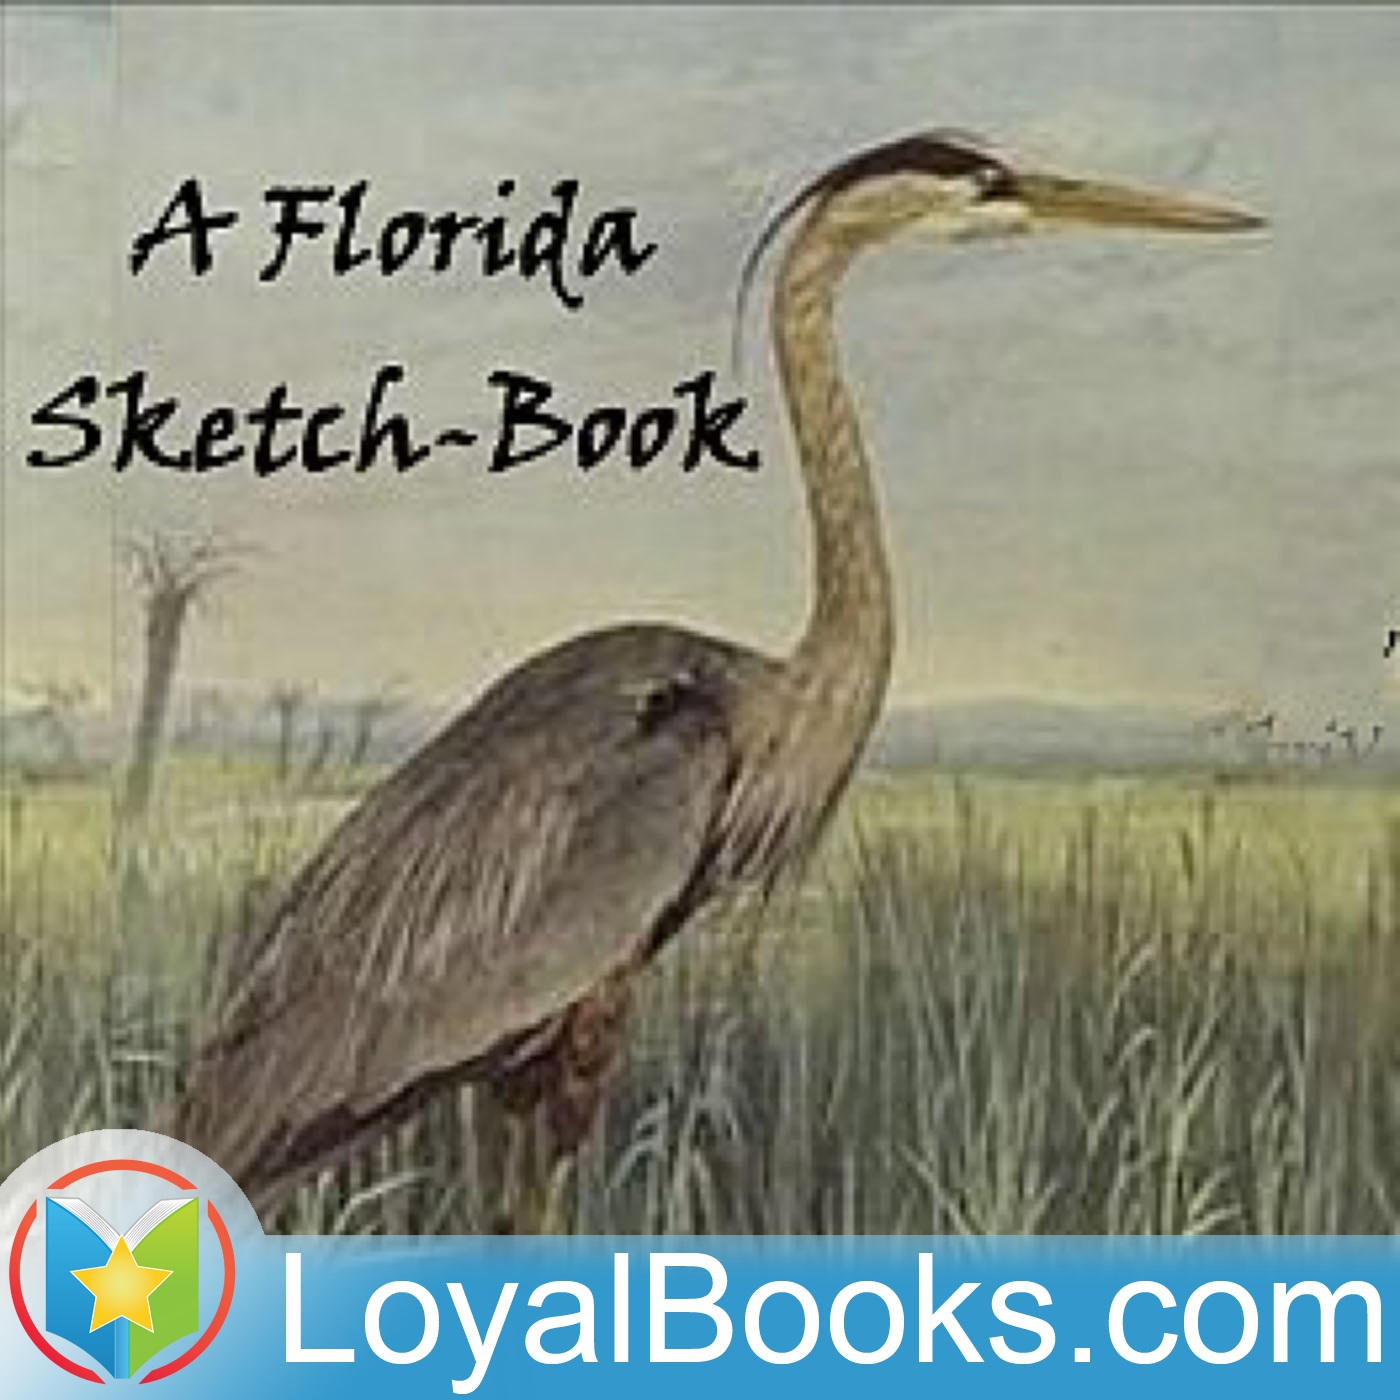 A Florida Sketch-Book by Bradford Torrey